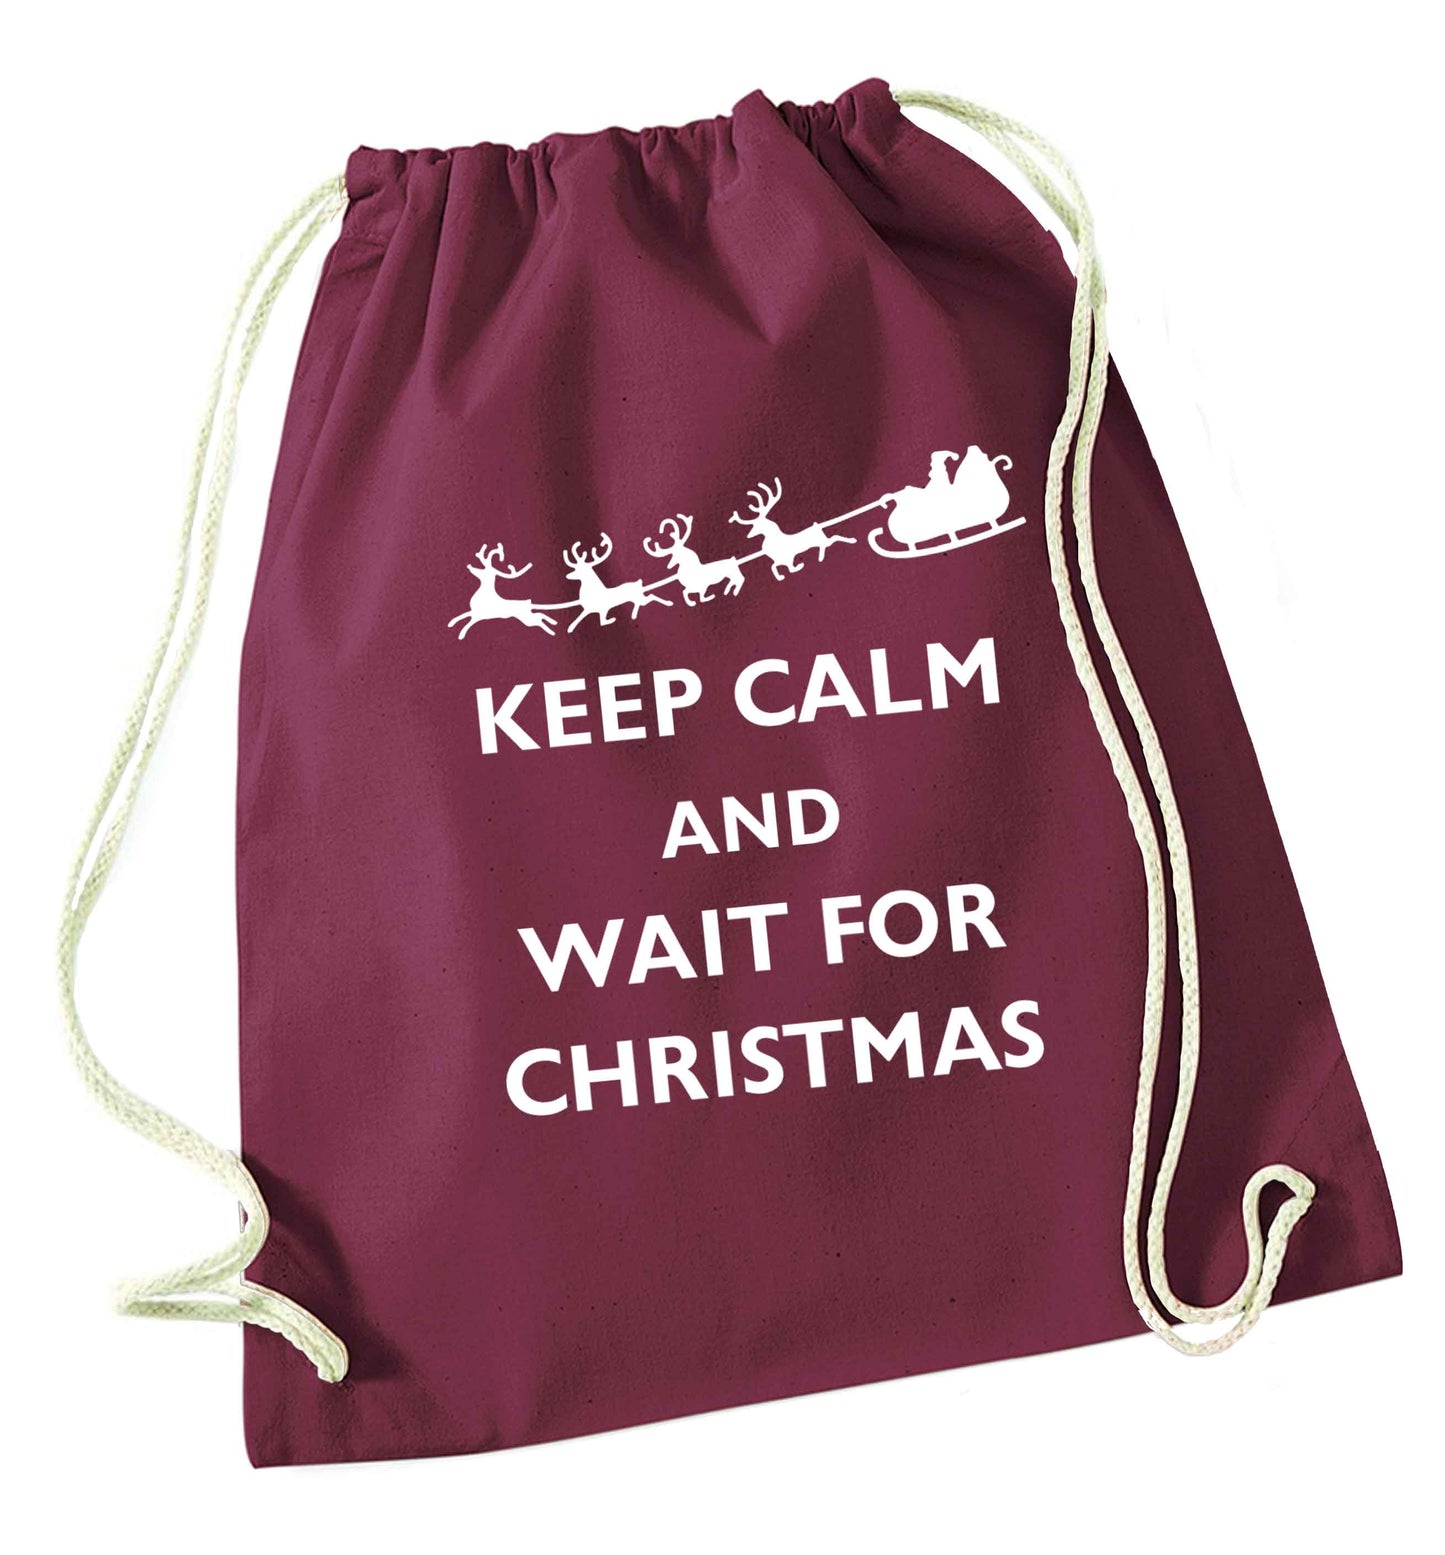 Keep calm and wait for Christmas maroon drawstring bag